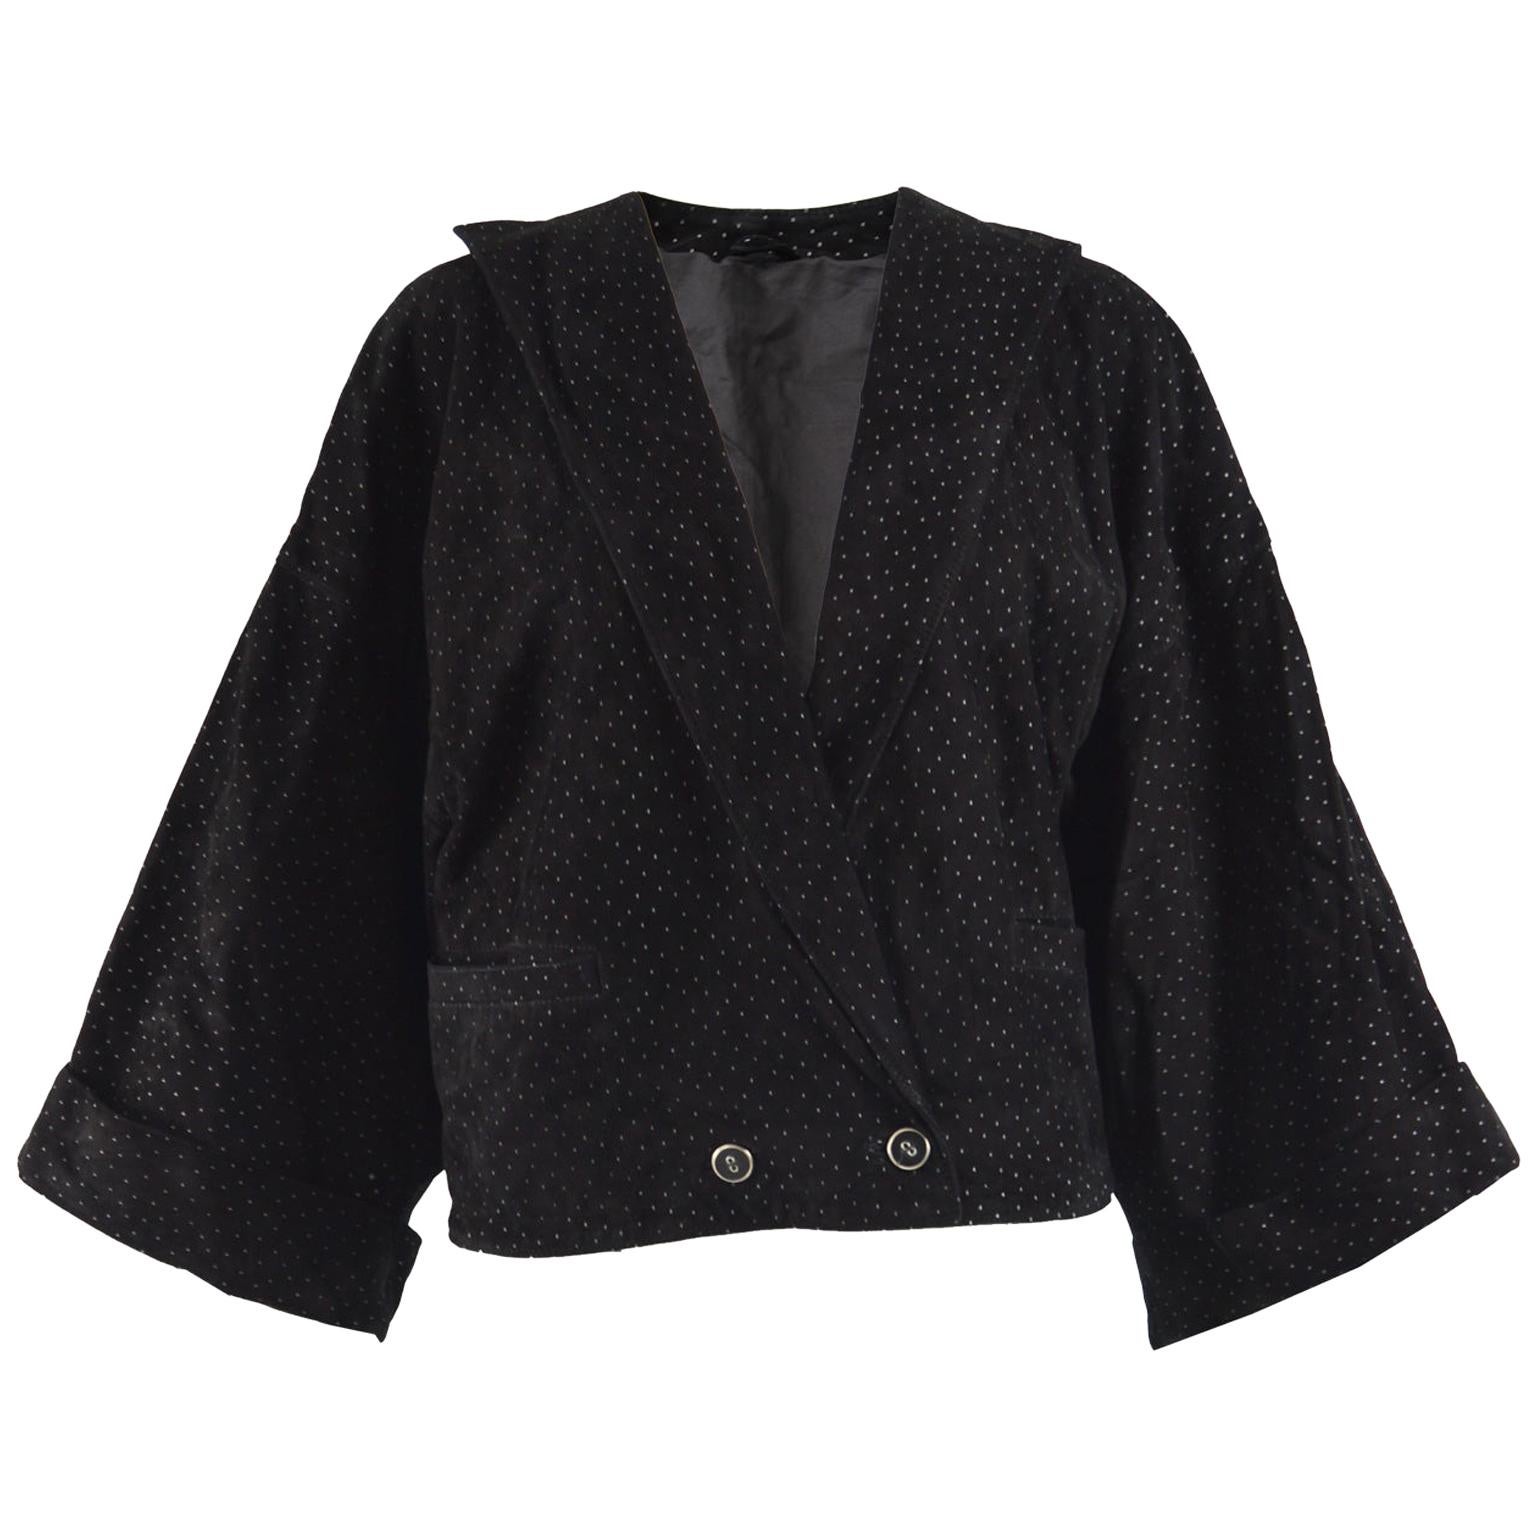 Gianni Versace Vintage 1980s Black Suede Jacket